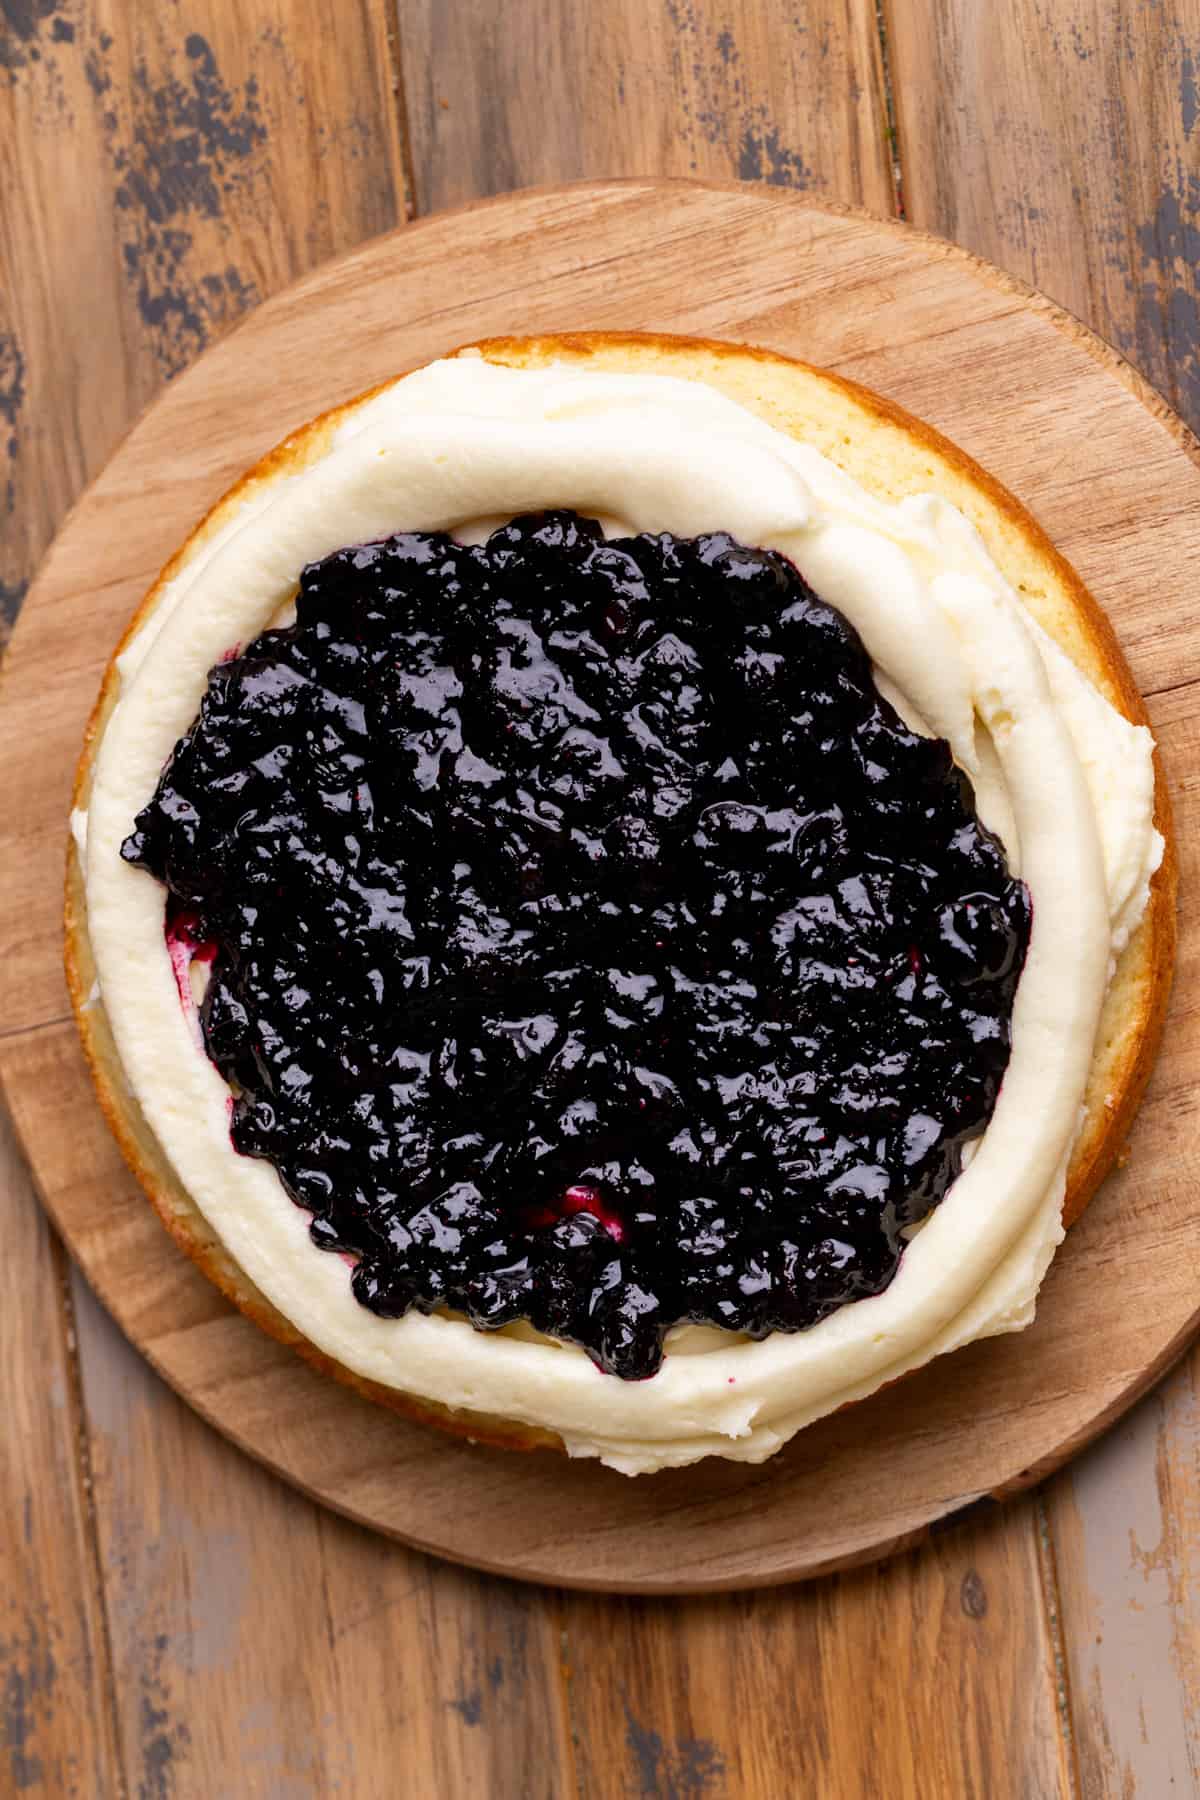 Blueberry jam over cake.